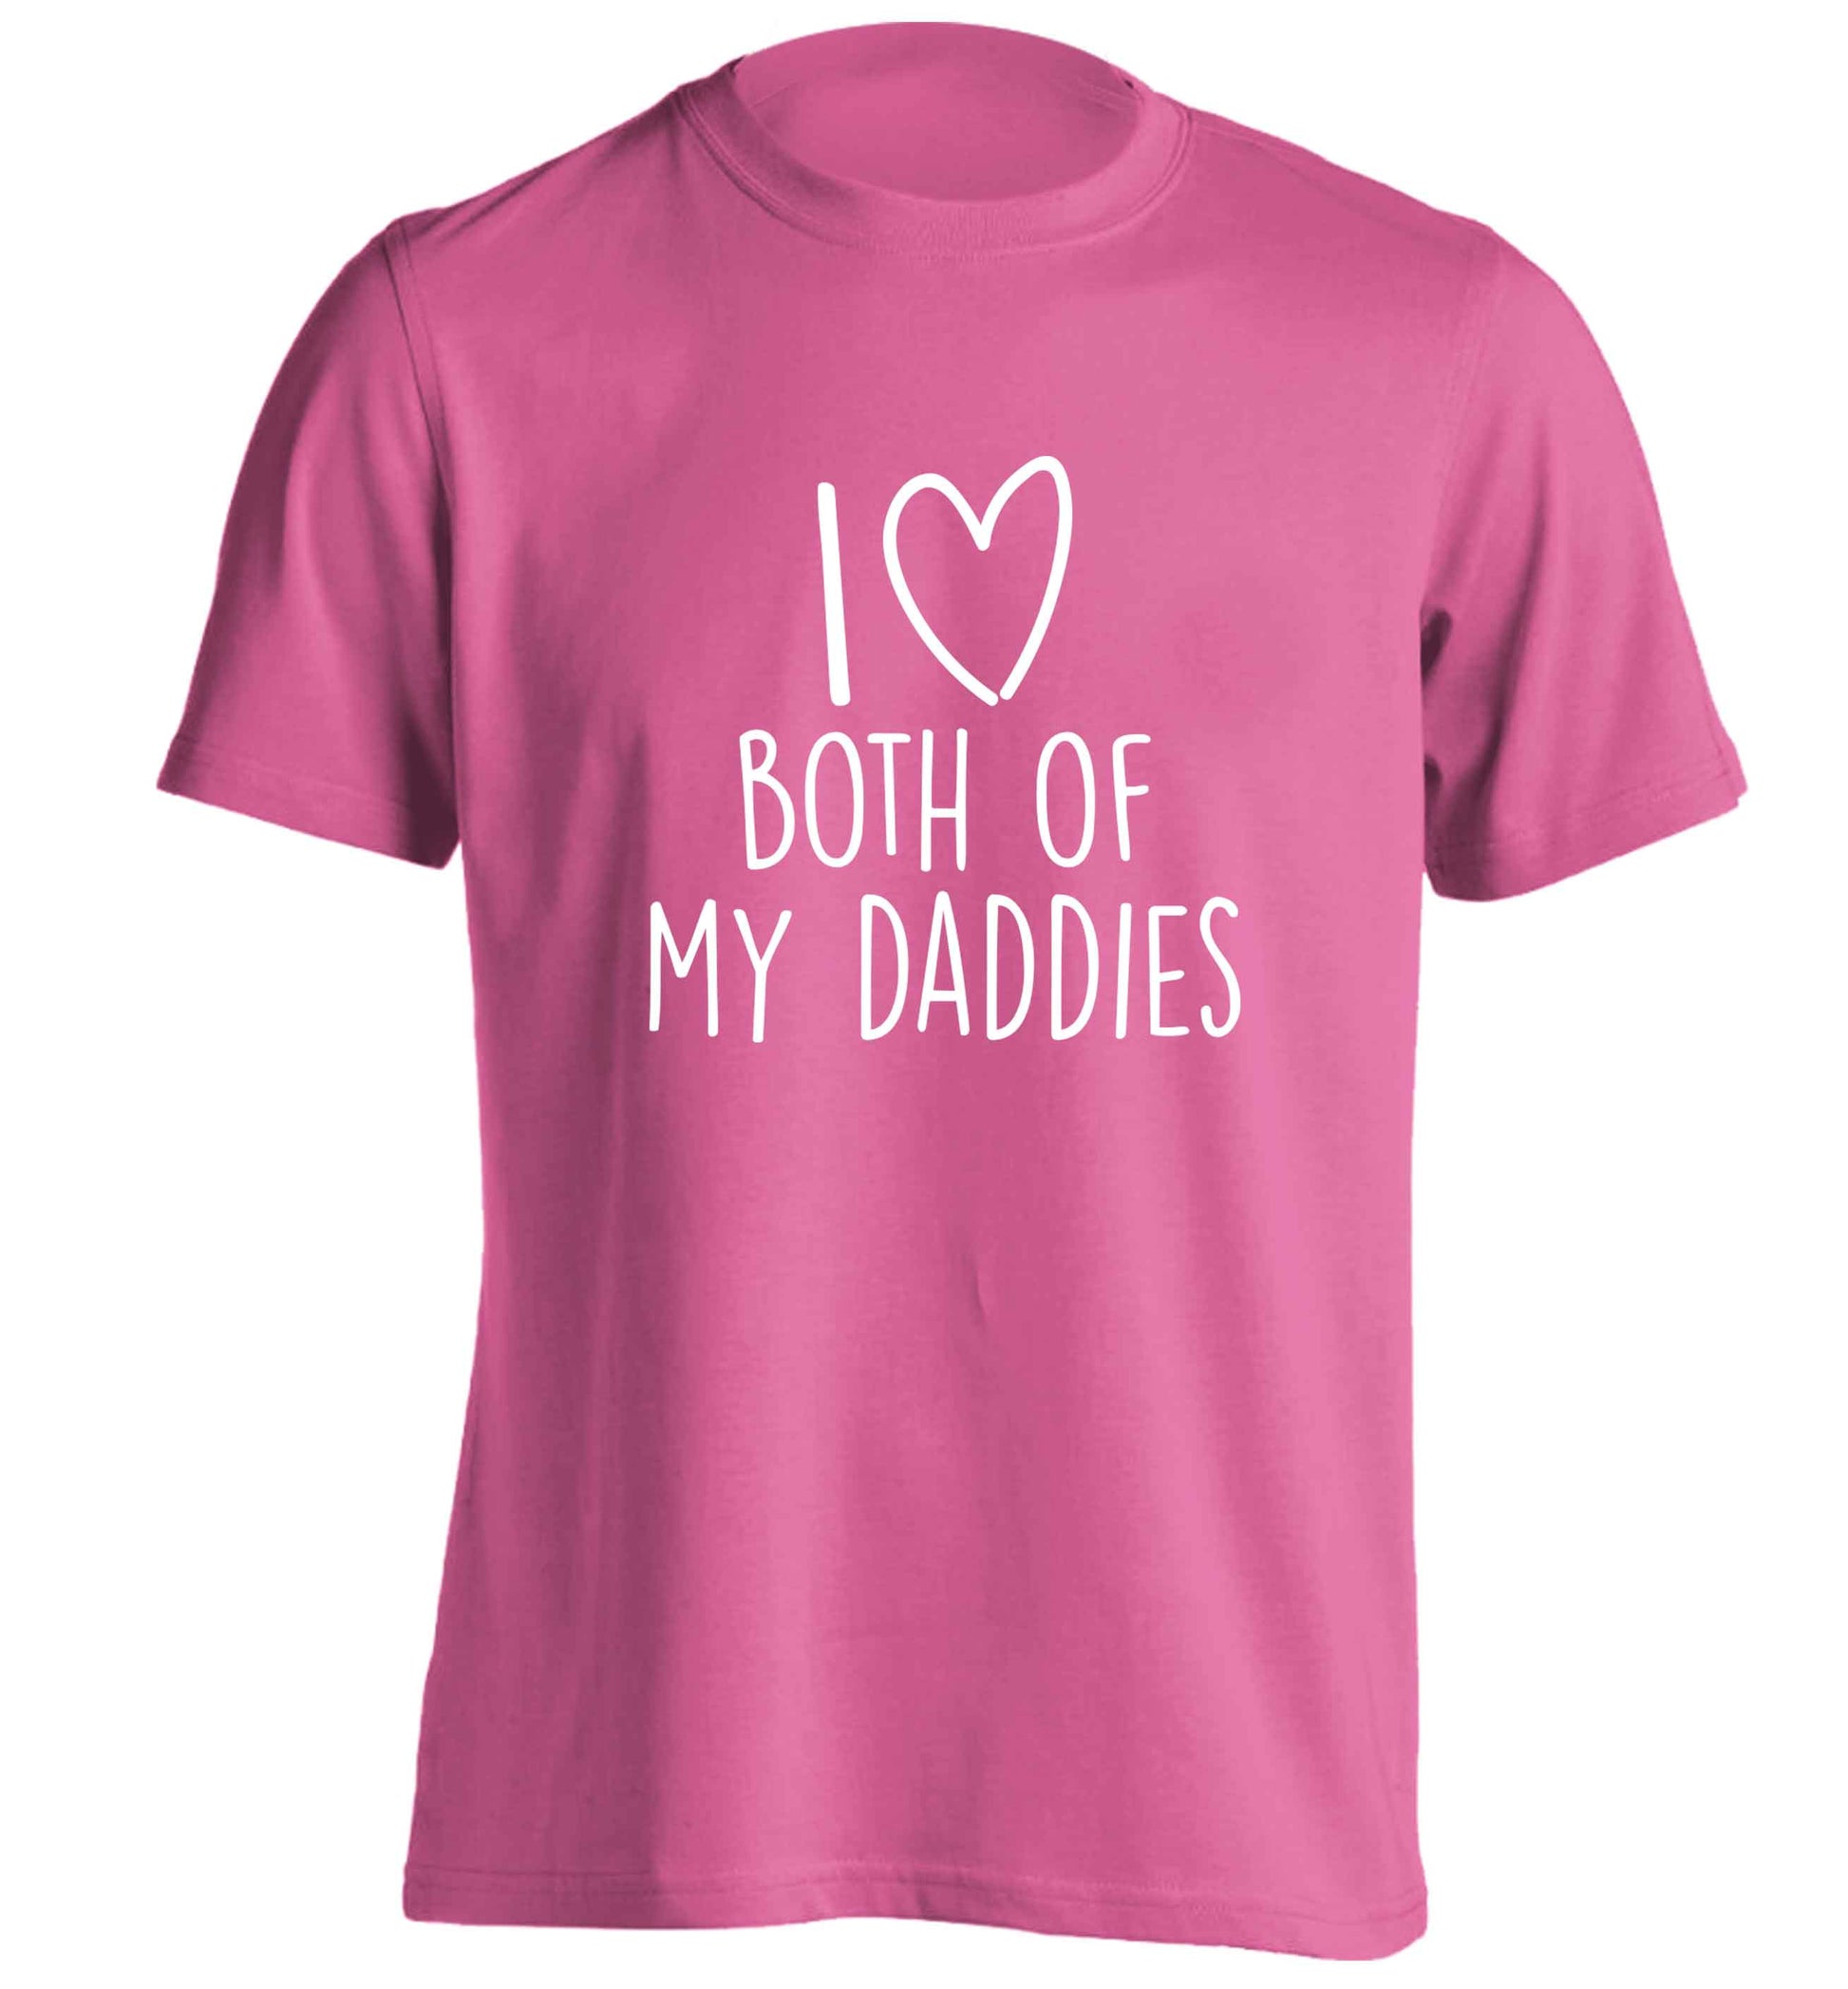 I love both of my daddies adults unisex pink Tshirt 2XL